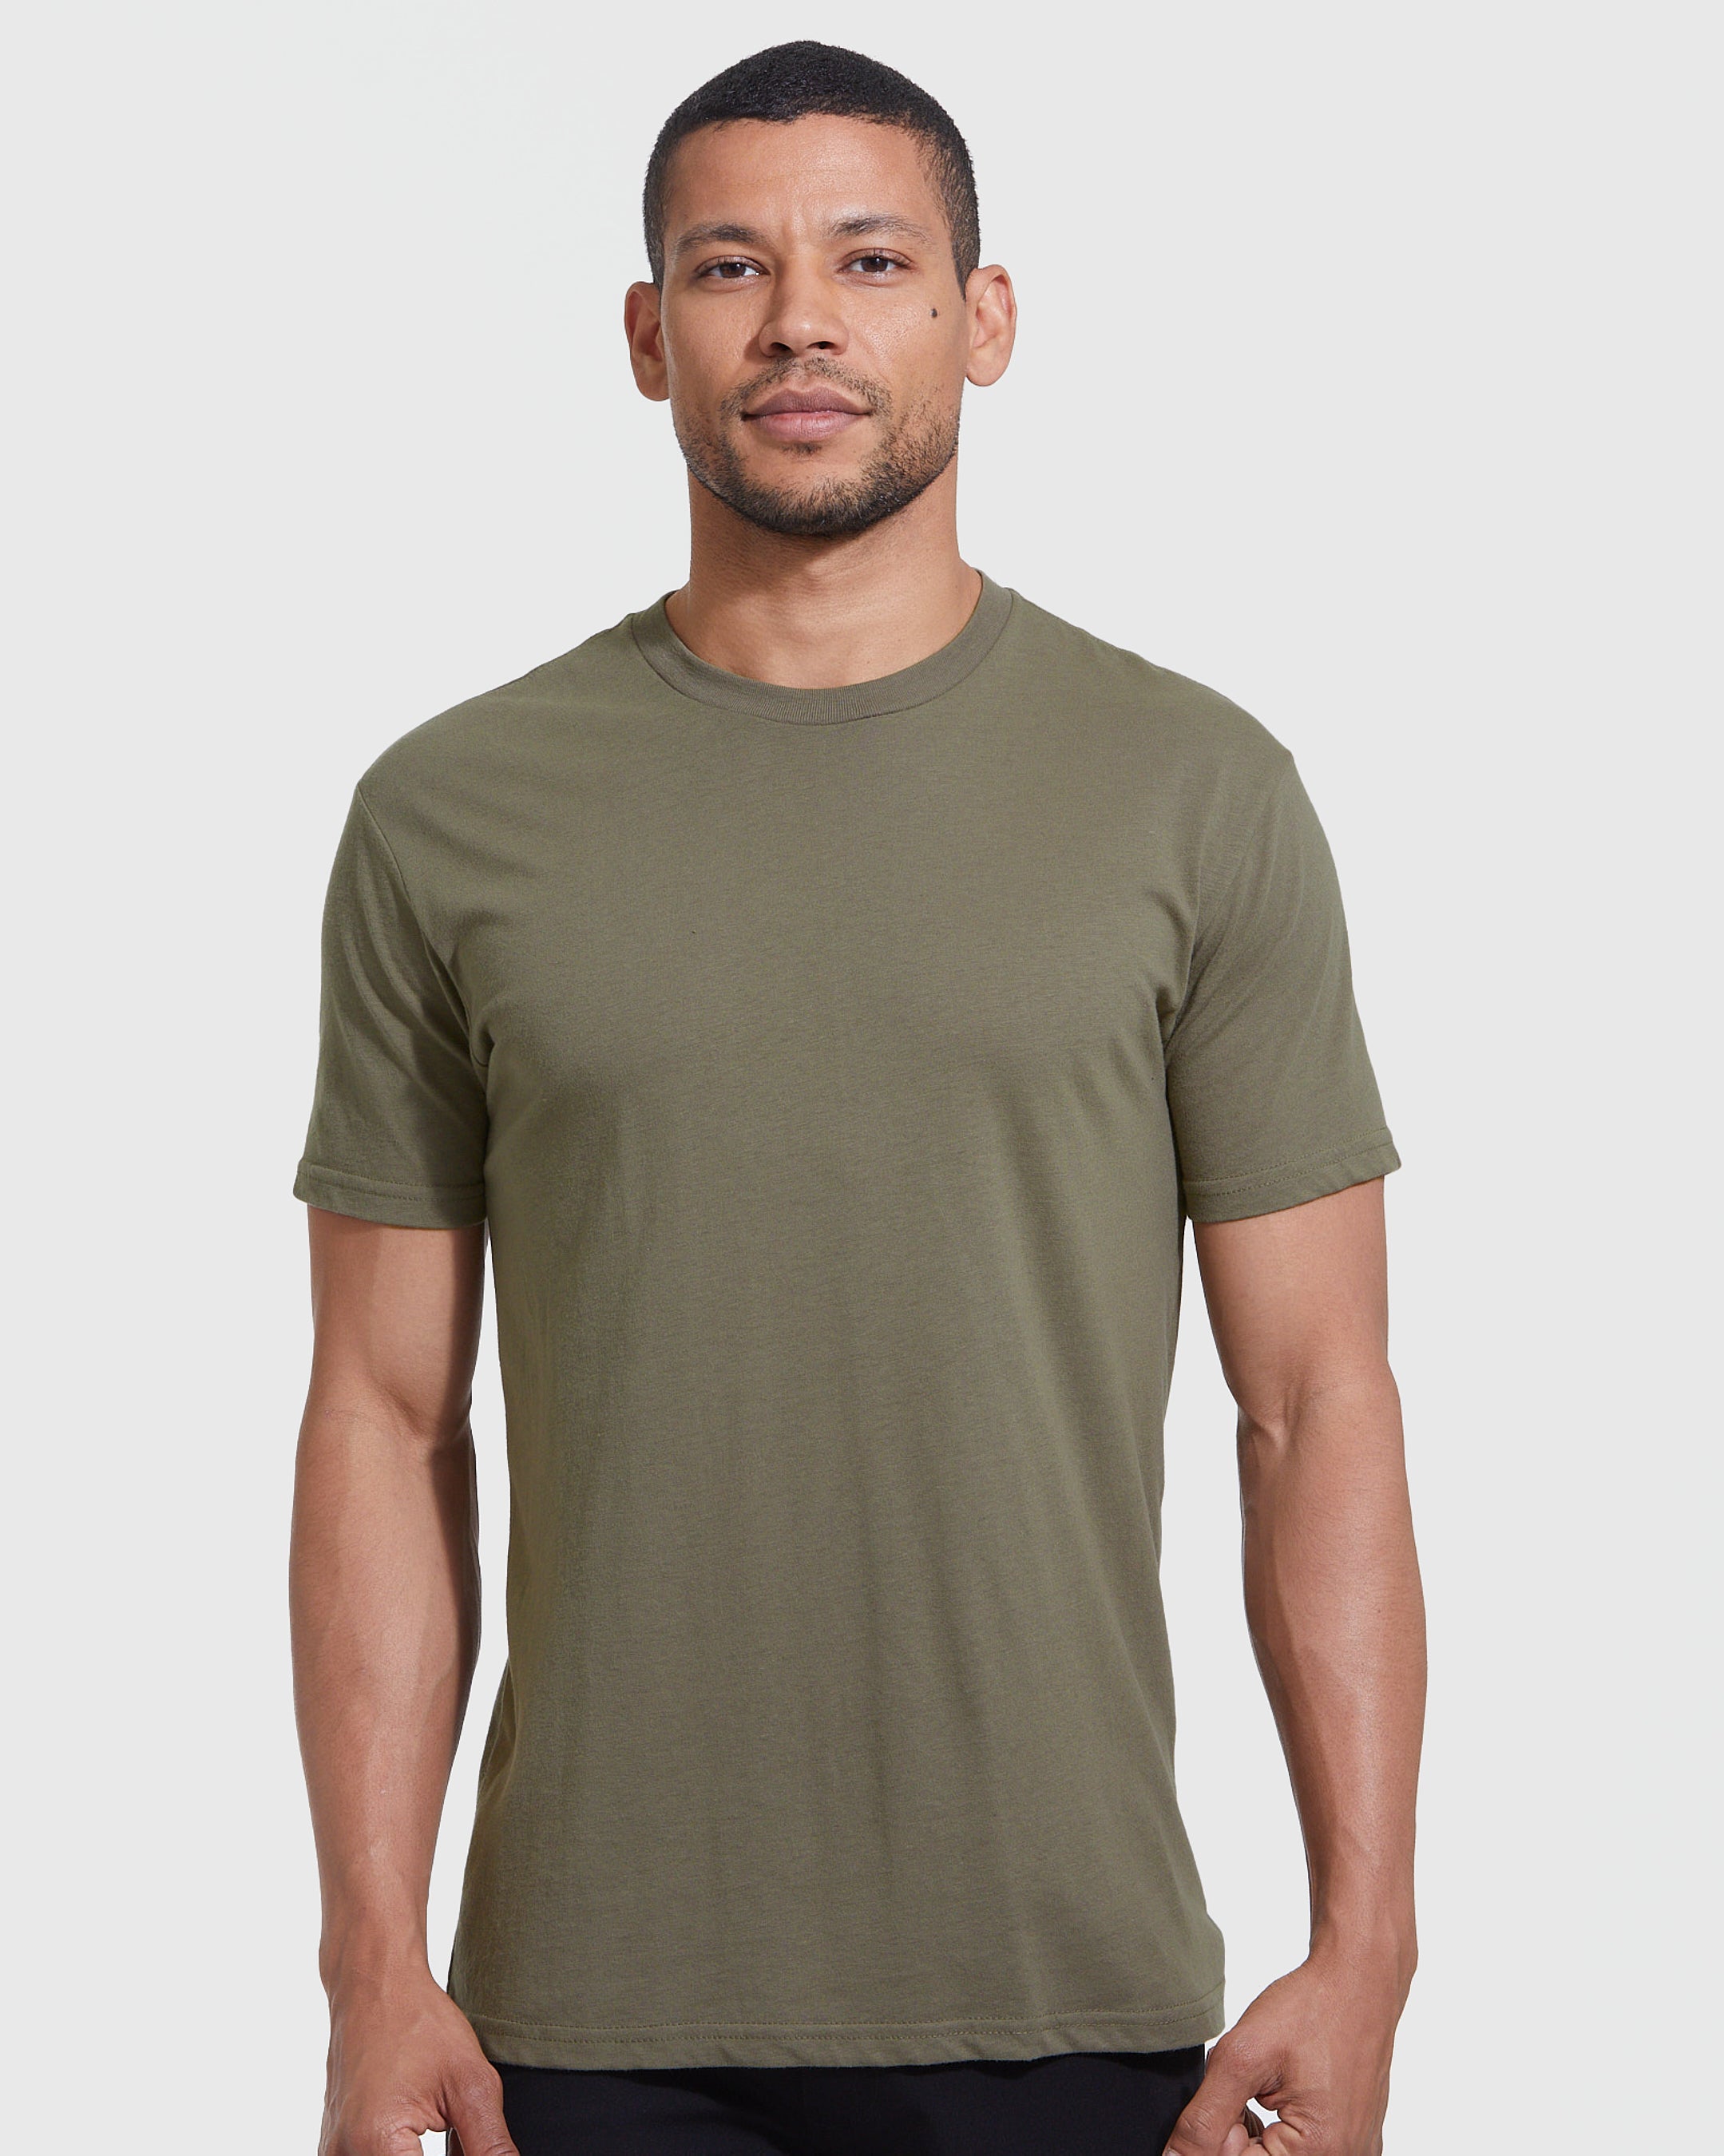 Green Crew True – Military Neck T-Shirt Classic